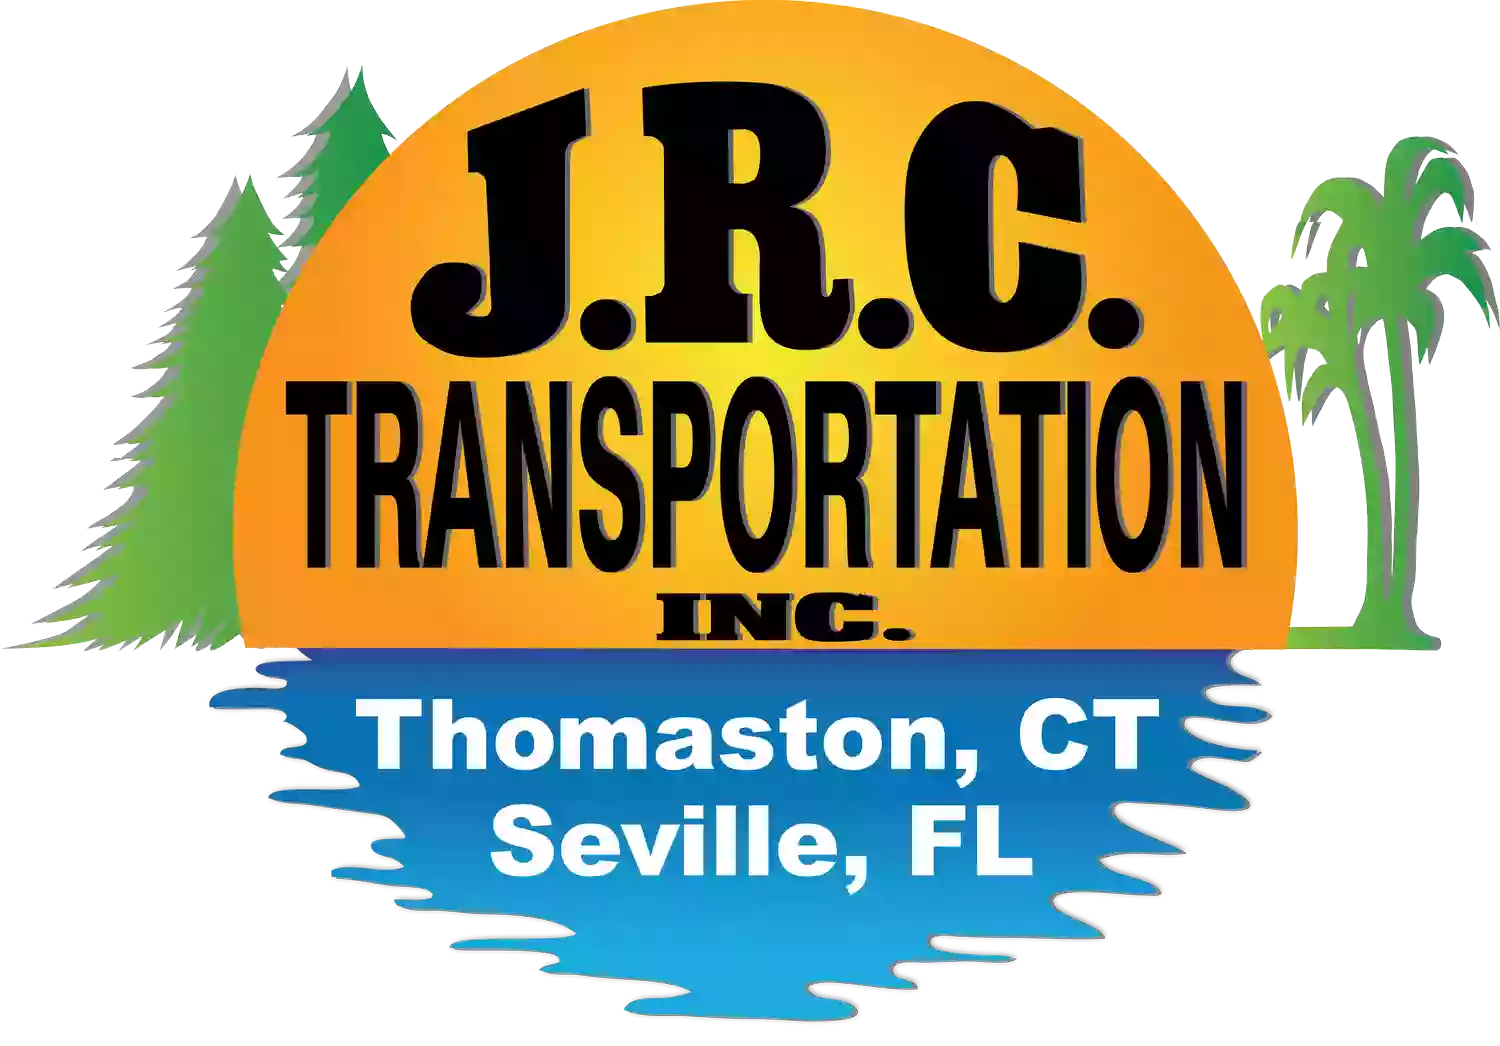 Jcr Transportation Inc